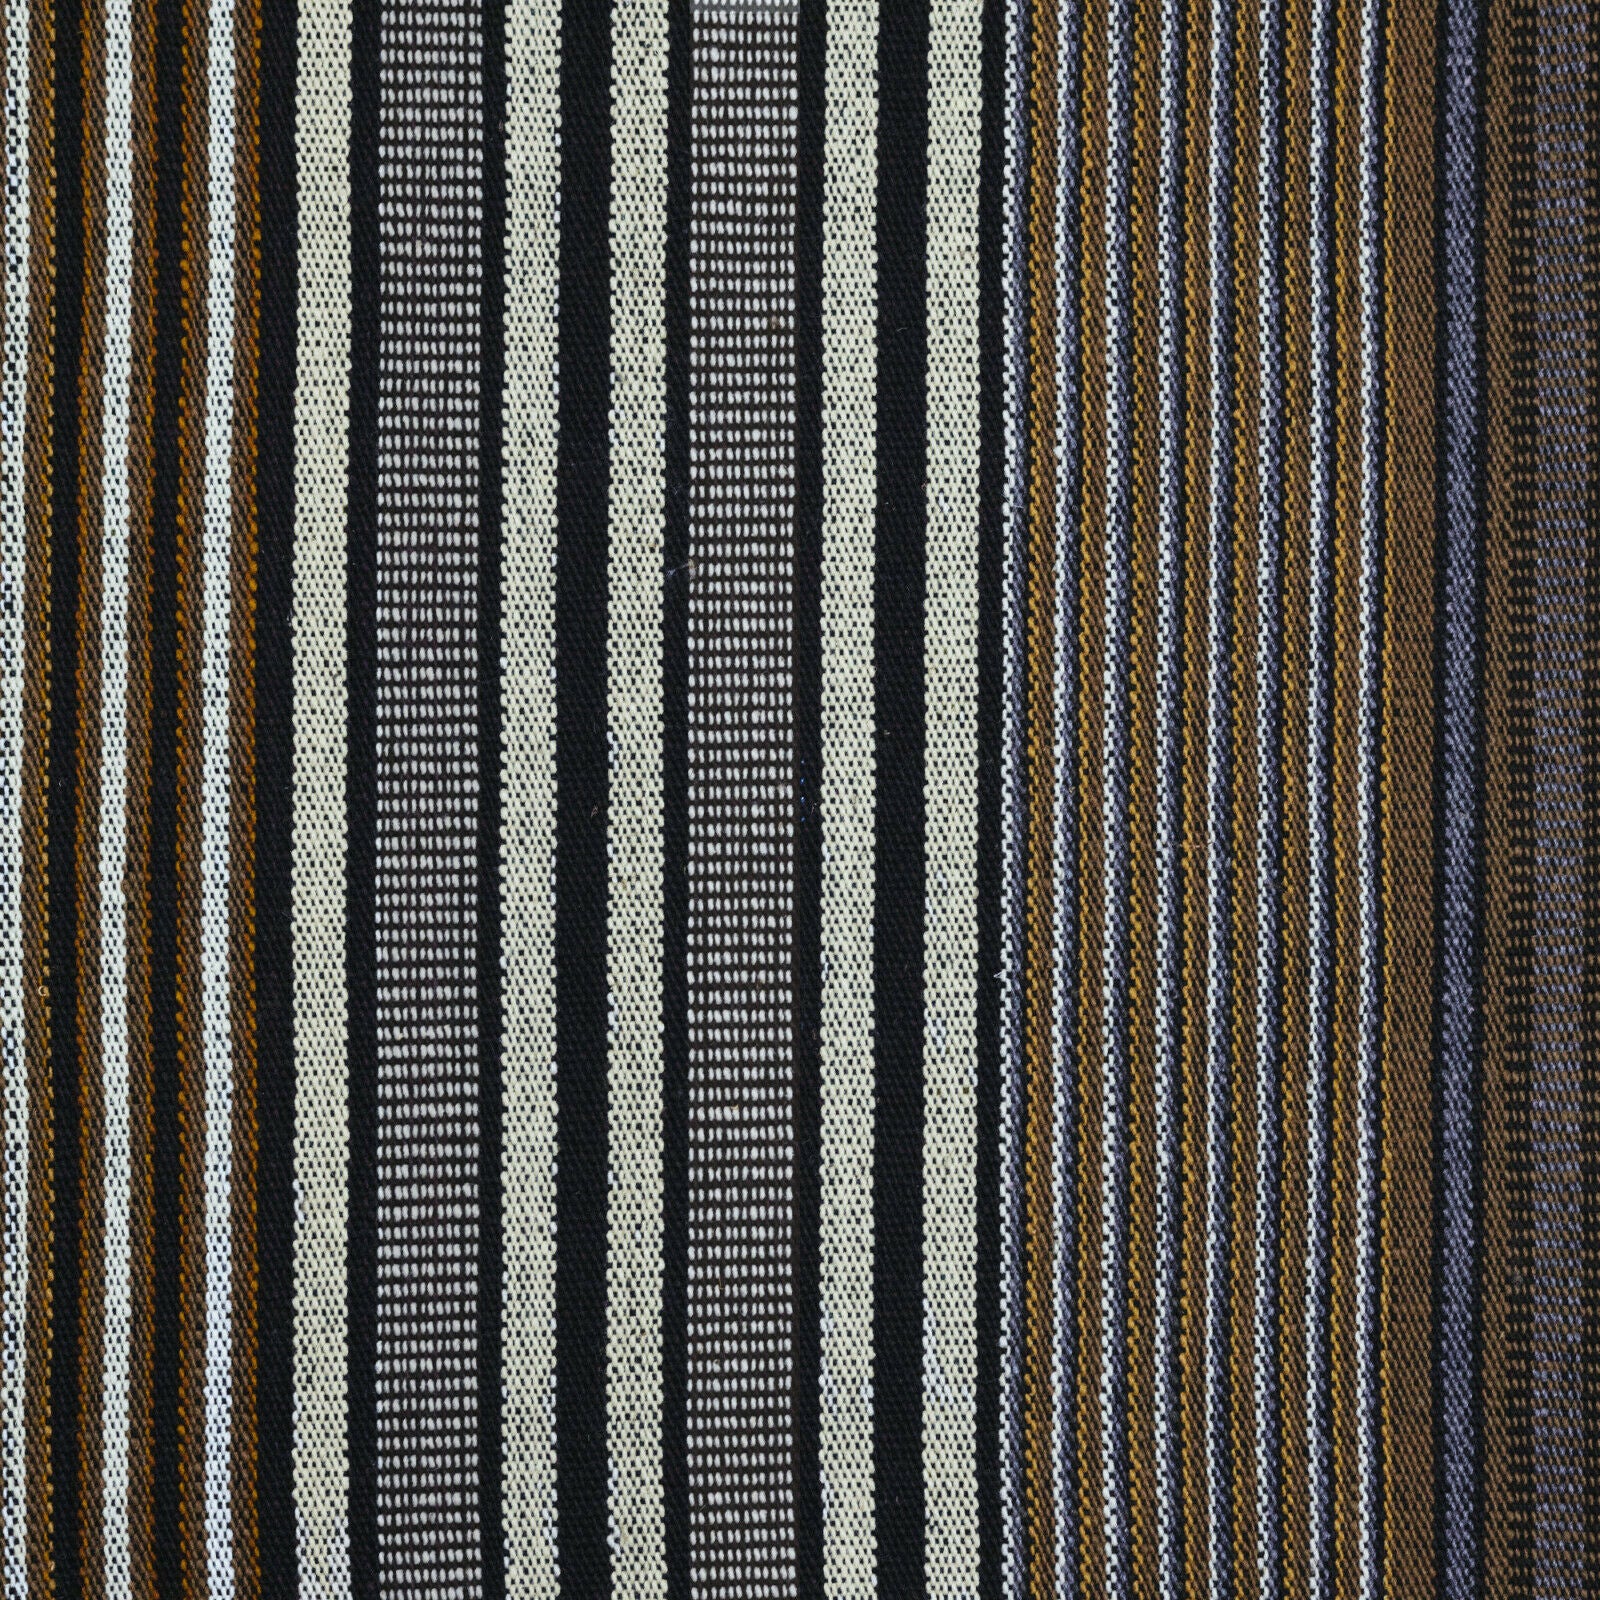 Yacuambi - Llama Wool Unisex South American Handwoven Thick Serape Poncho - striped - brown/gray